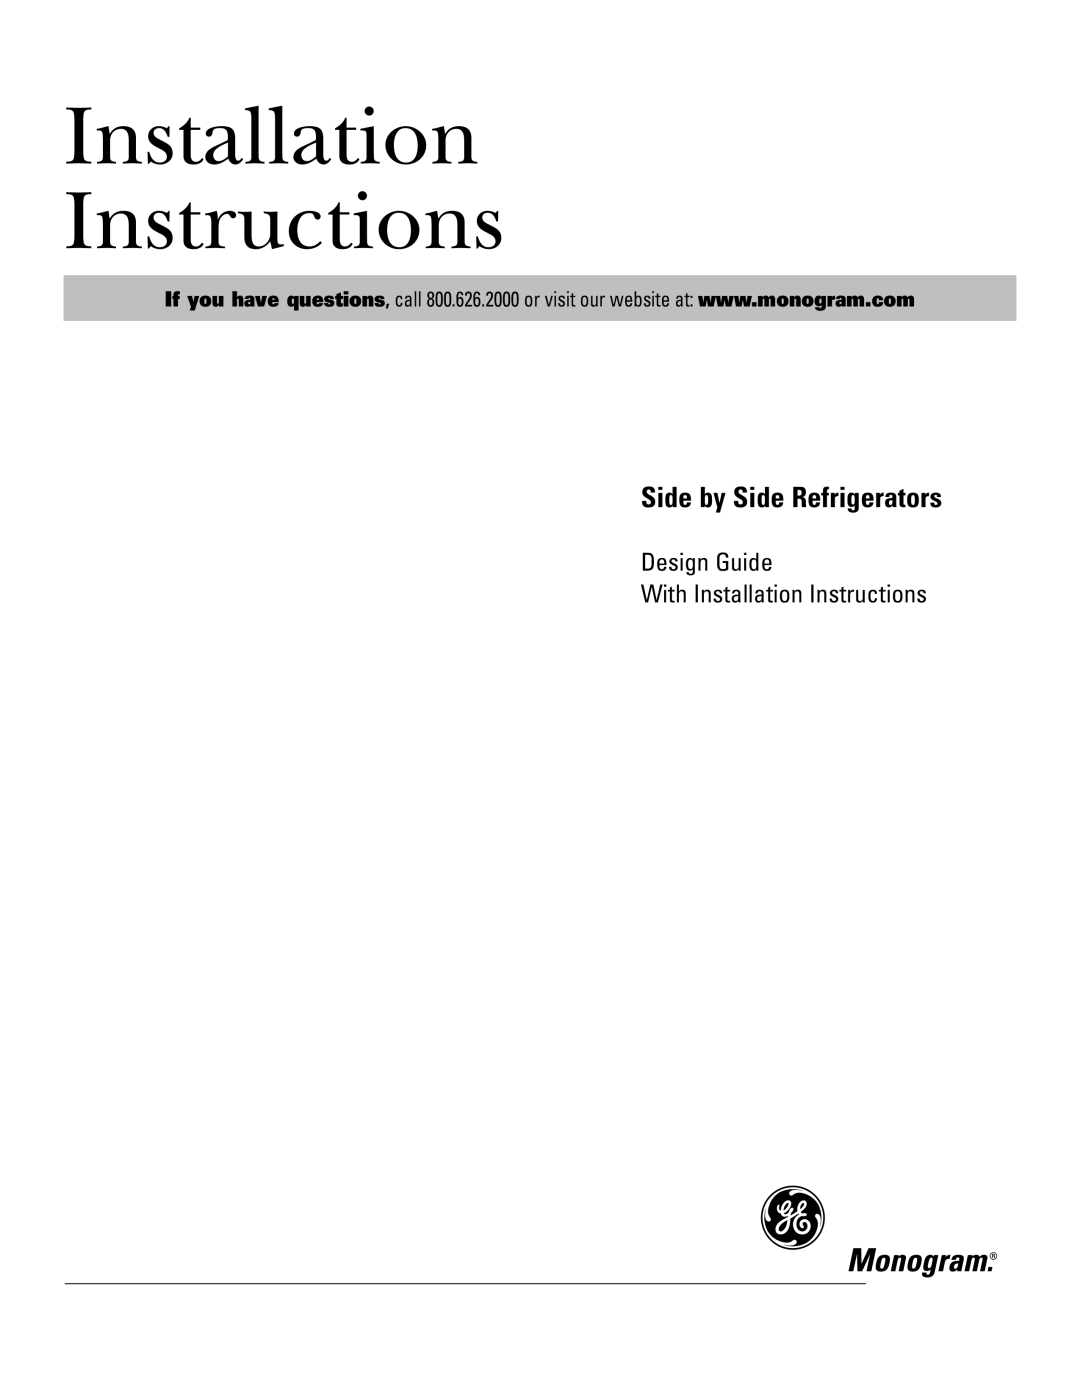 GE Monogram Side by Side Refrigerators installation instructions Installation Instructions 